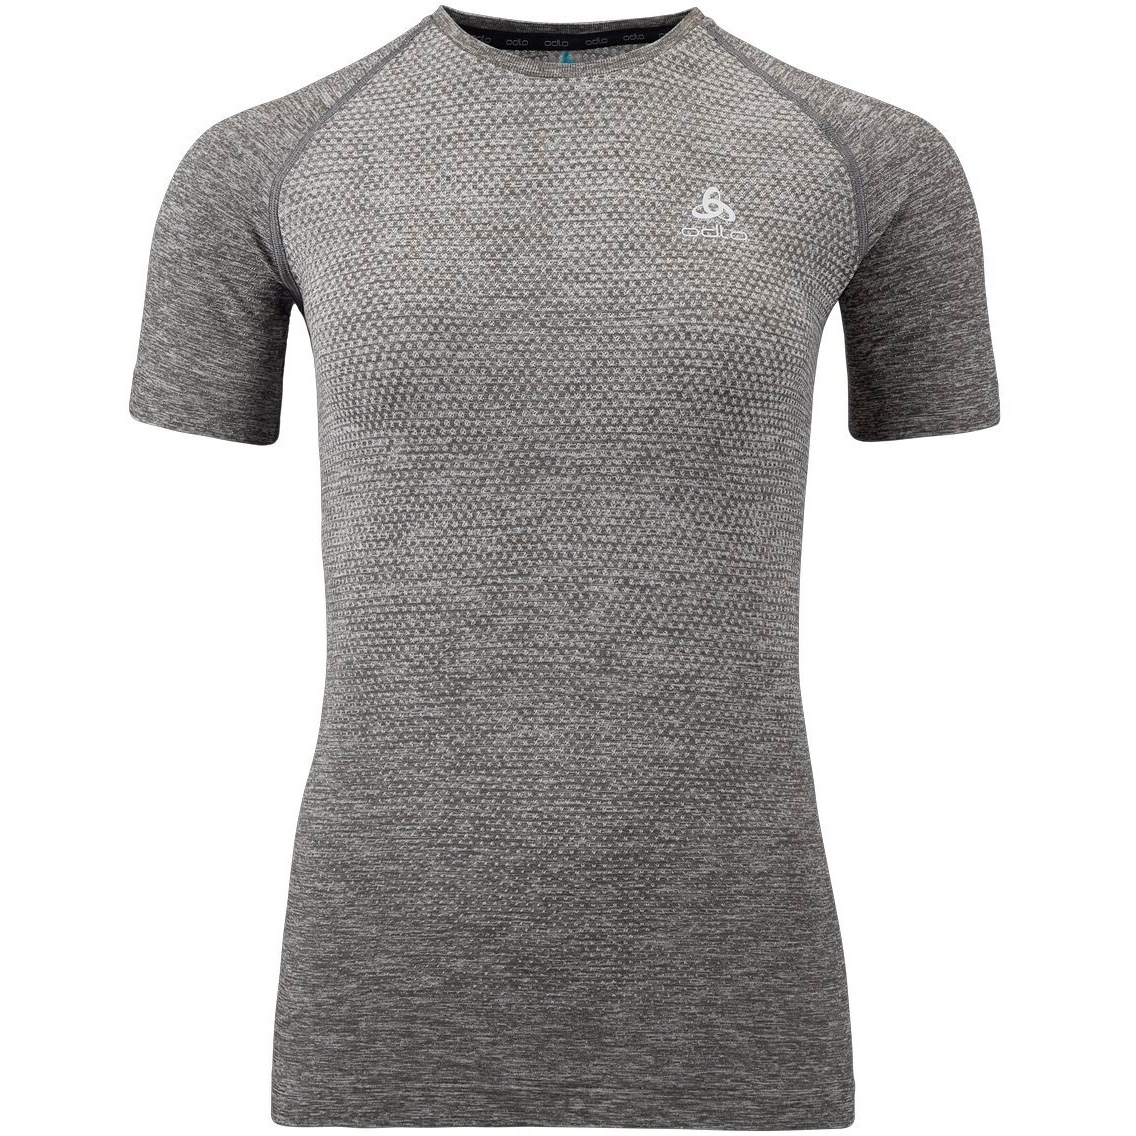 Odlo Essentials Seamless Running T-Shirt Women - stone grey melange